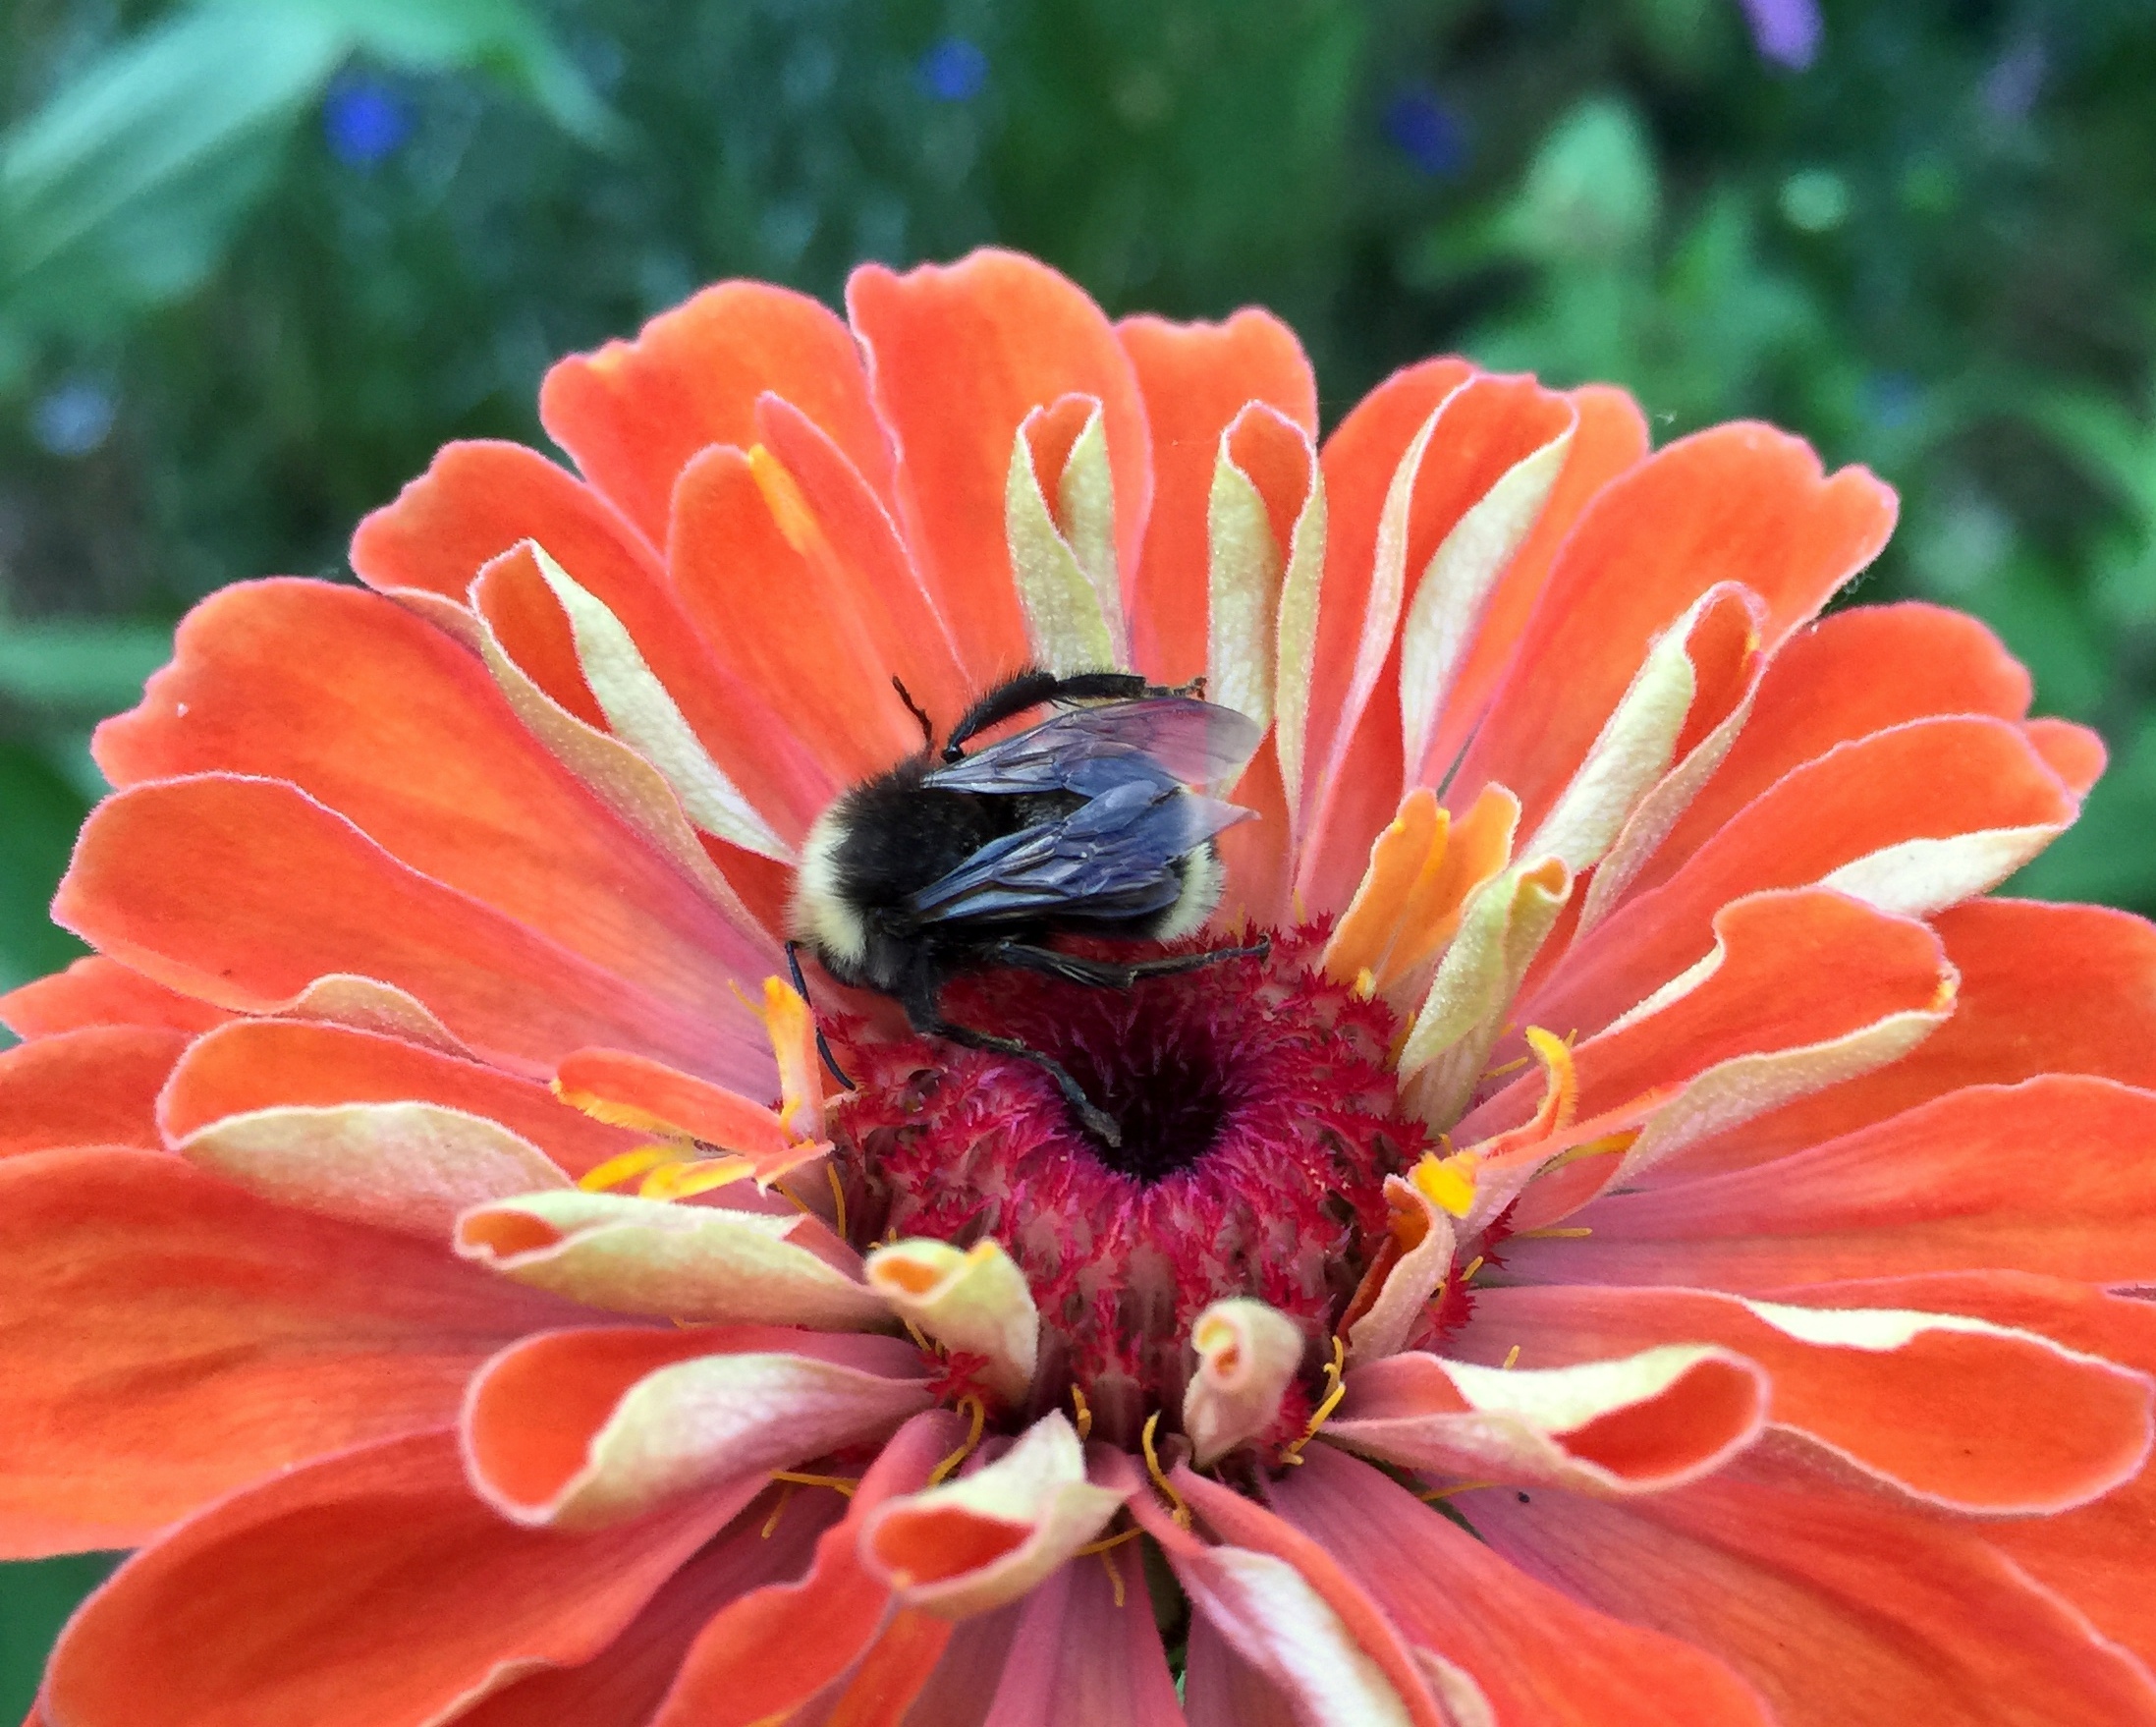 A fuzzy, dark bee is sprawled across a bright orange-pink flower.